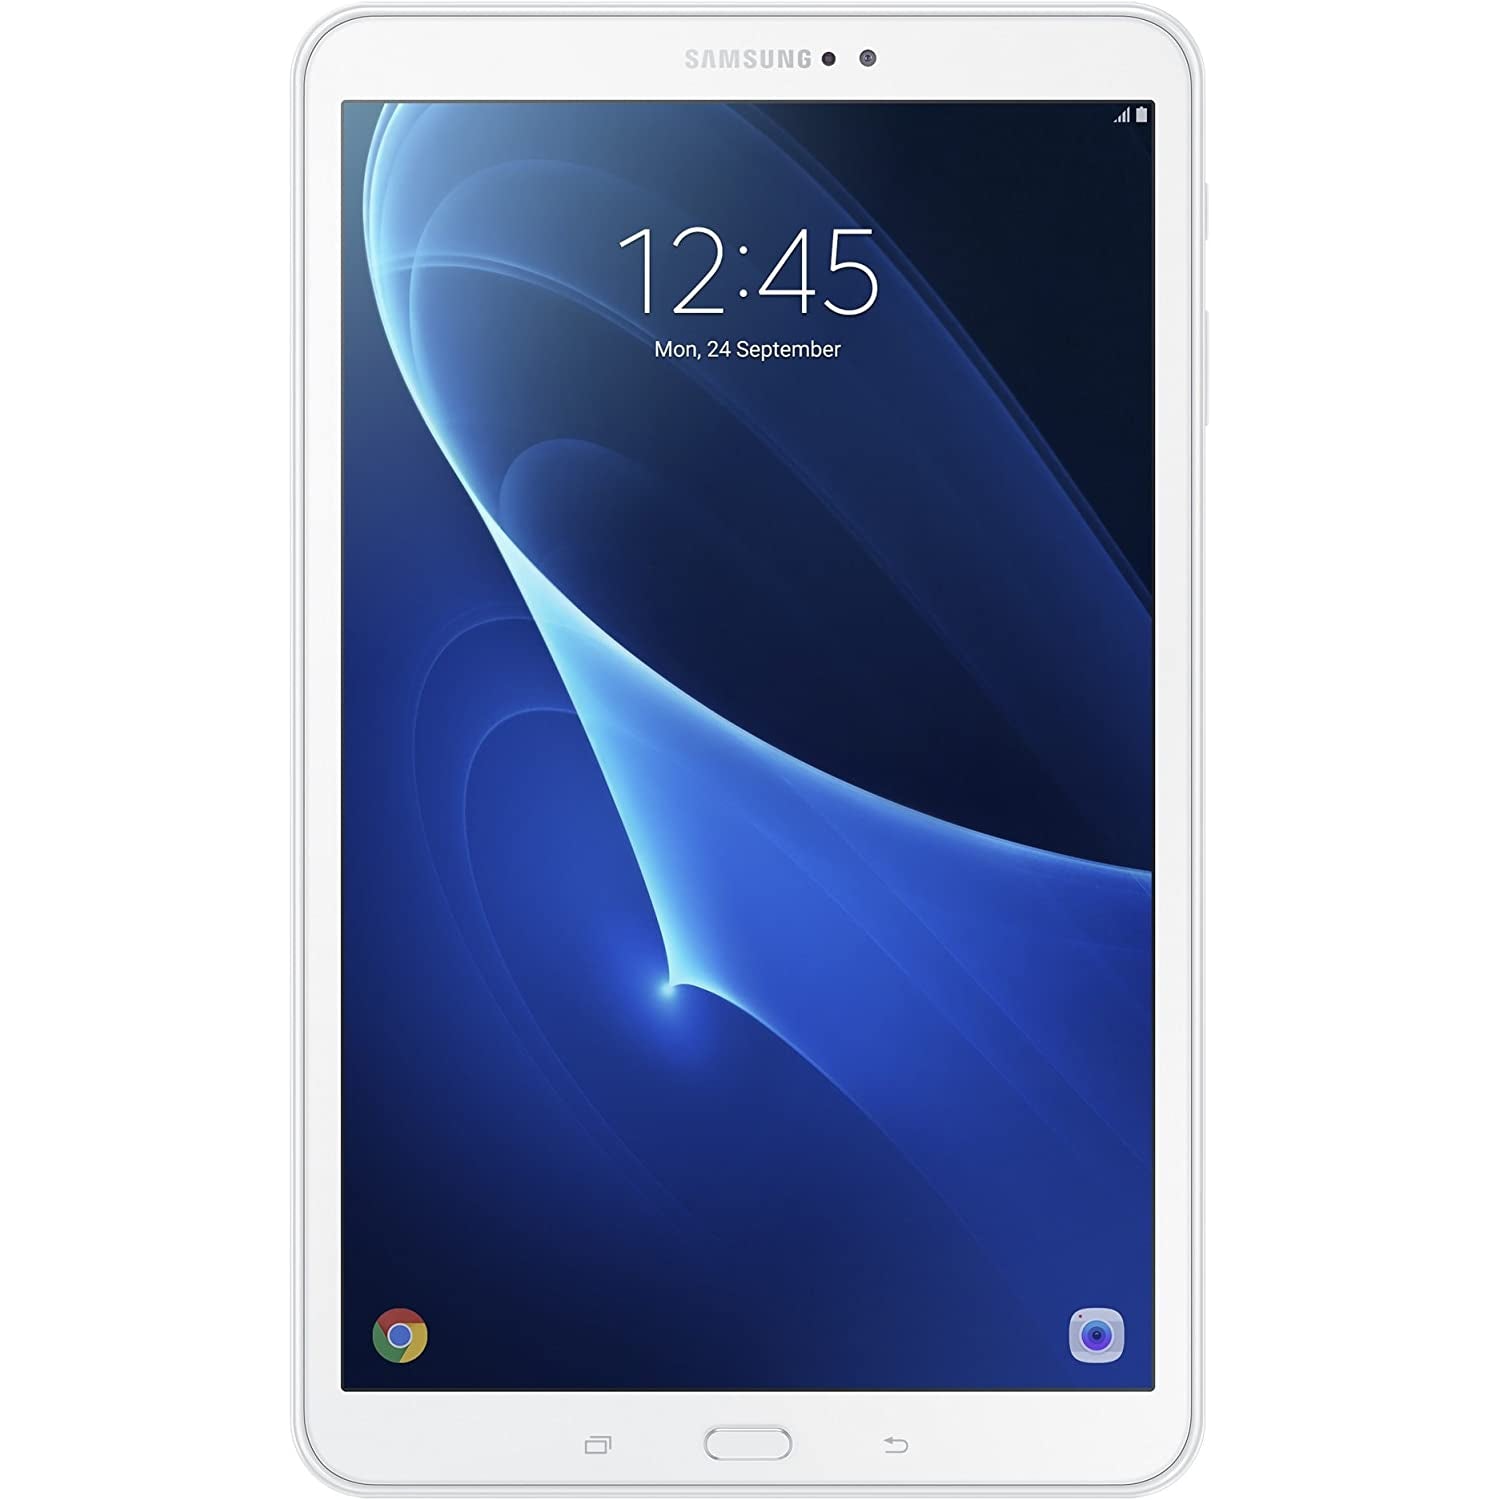 Samsung Galaxy Tab A 10.1, 16GB, White - Refurbished Excellent